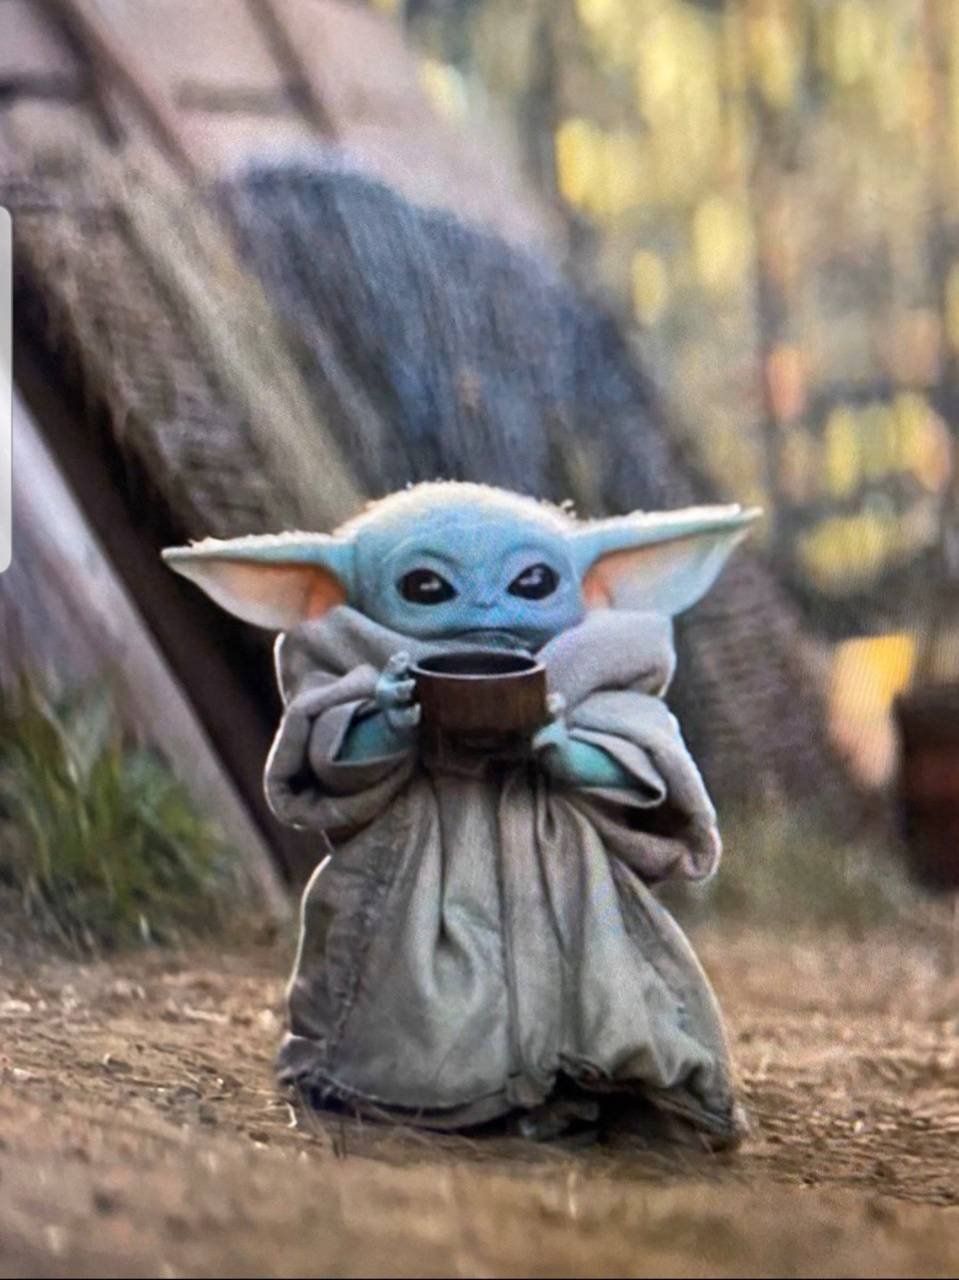 The child in star wars - Baby Yoda